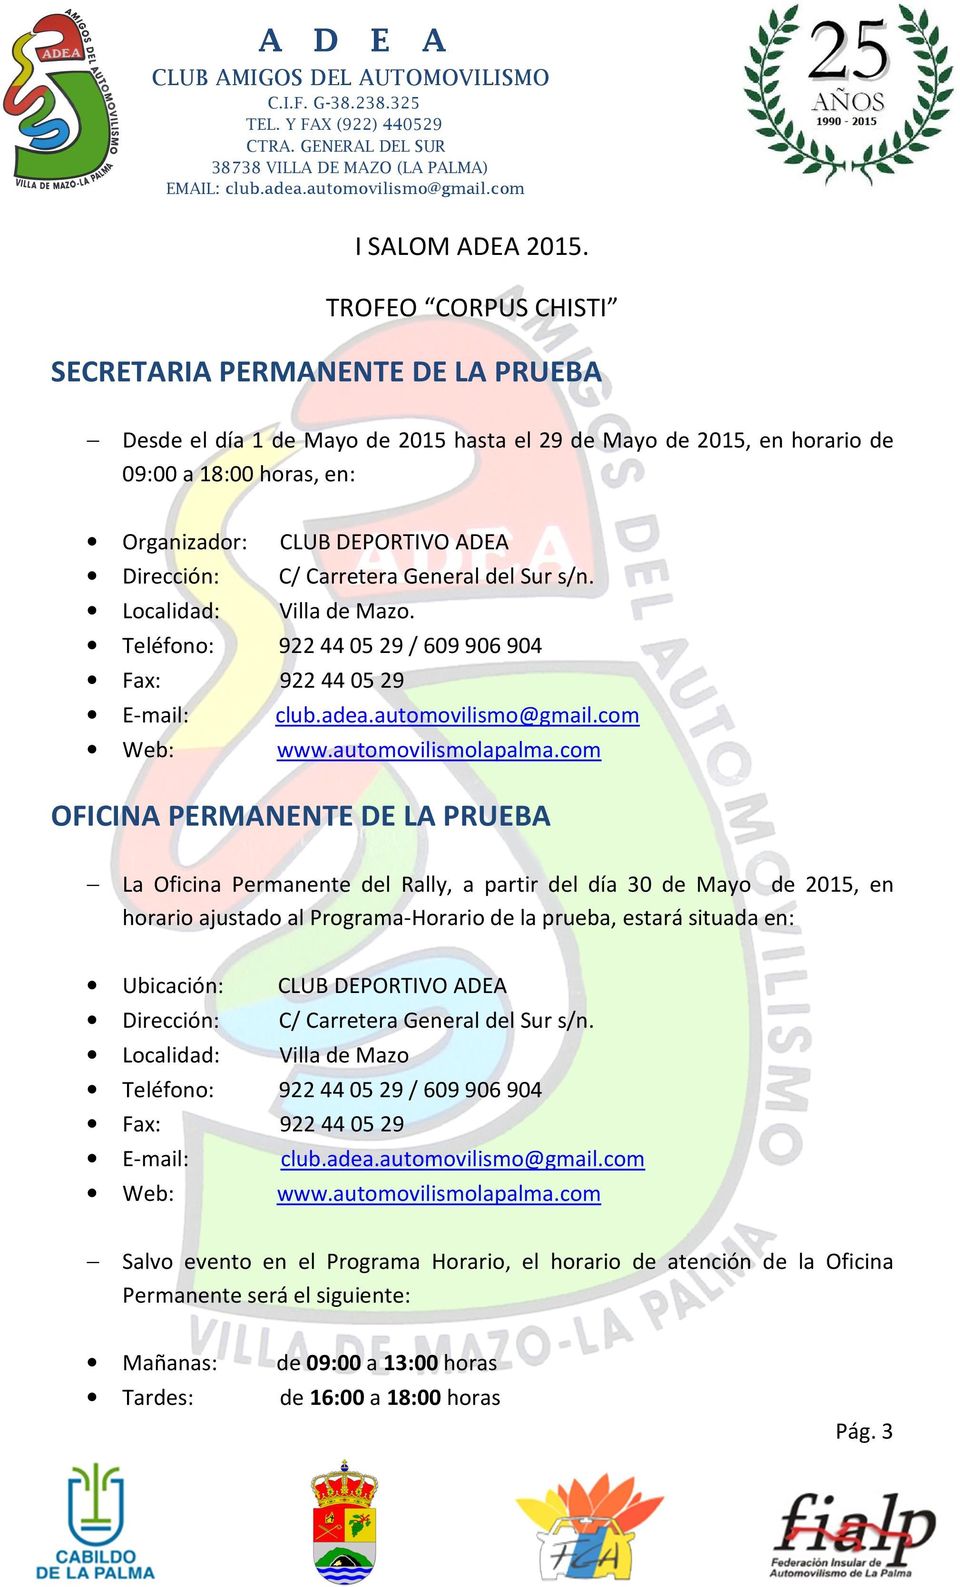 E-mail: Web: CLUB DEPORTIVO DE C/ Carretera General del Sur s/n. Villa de Mazo. 922 44 05 29 / 609 906 904 922 44 05 29 club.adea.automovilismo@gmail.com www.automovilismolapalma.